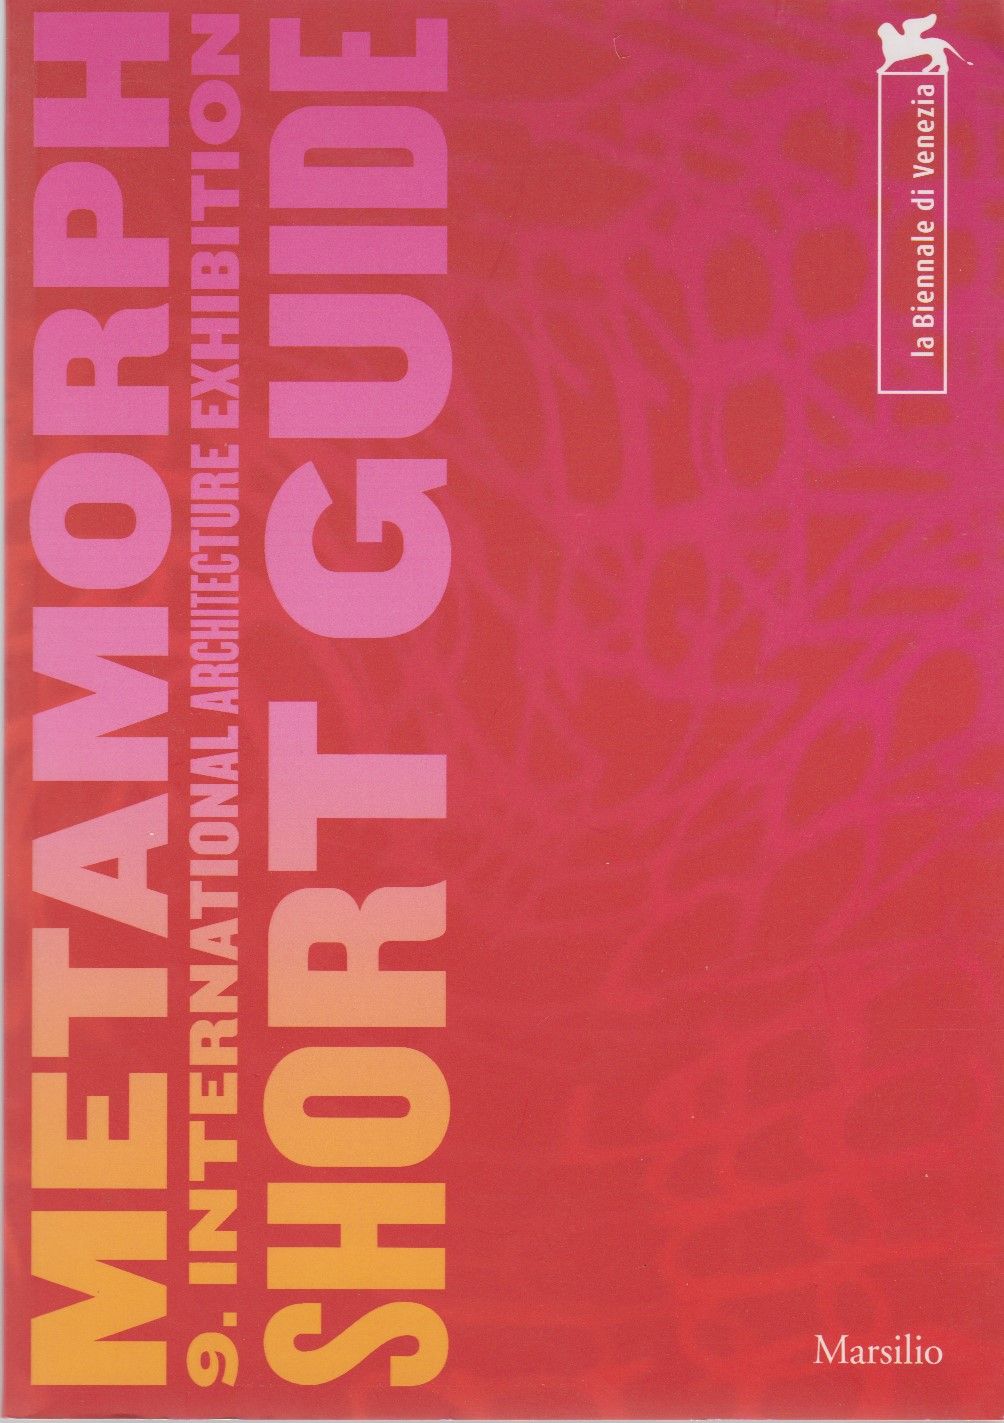 Metamorph. 9. International Architecture Exhibition. Short Guide. La Biennale di Venezia - Baltzer, Nanni and Kurt W. Forster (eds.)